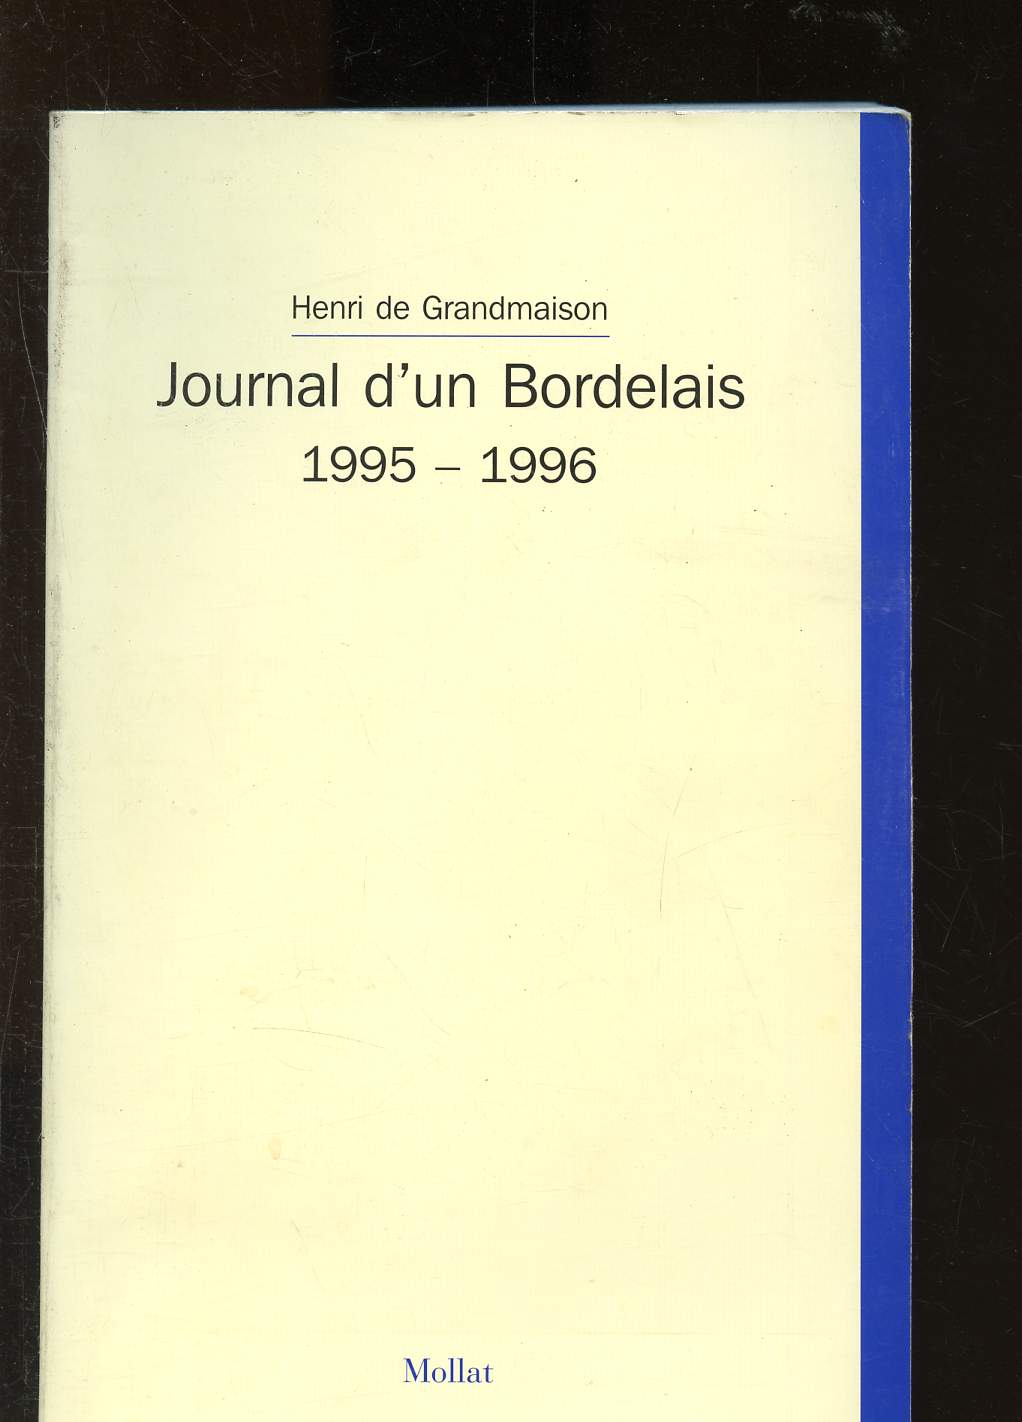 Journal d'un Bordelais 1995-1996